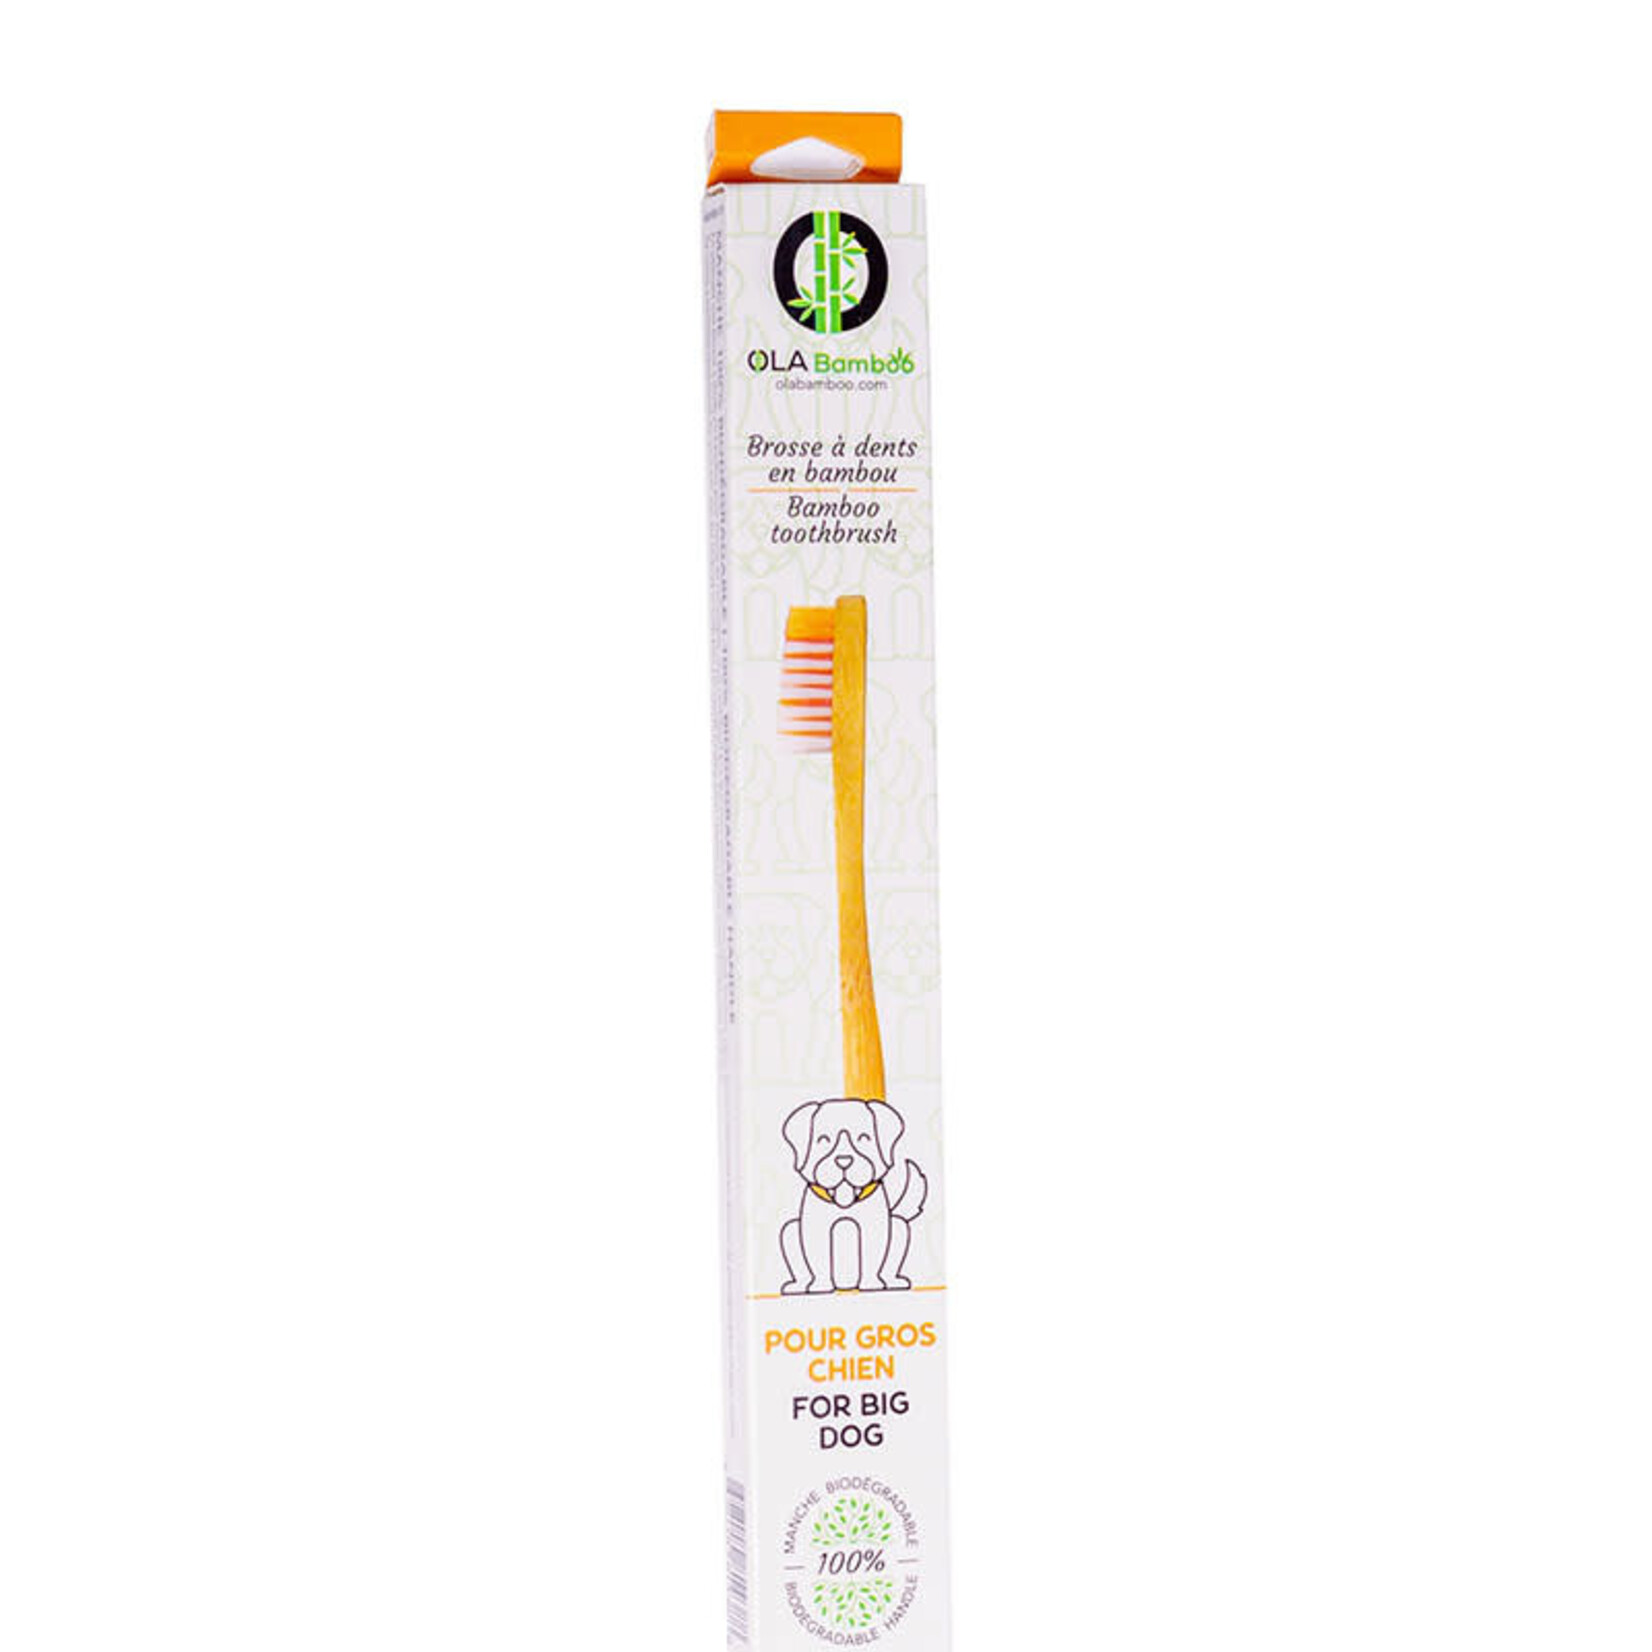 OLA Bamboo - Toothbrush